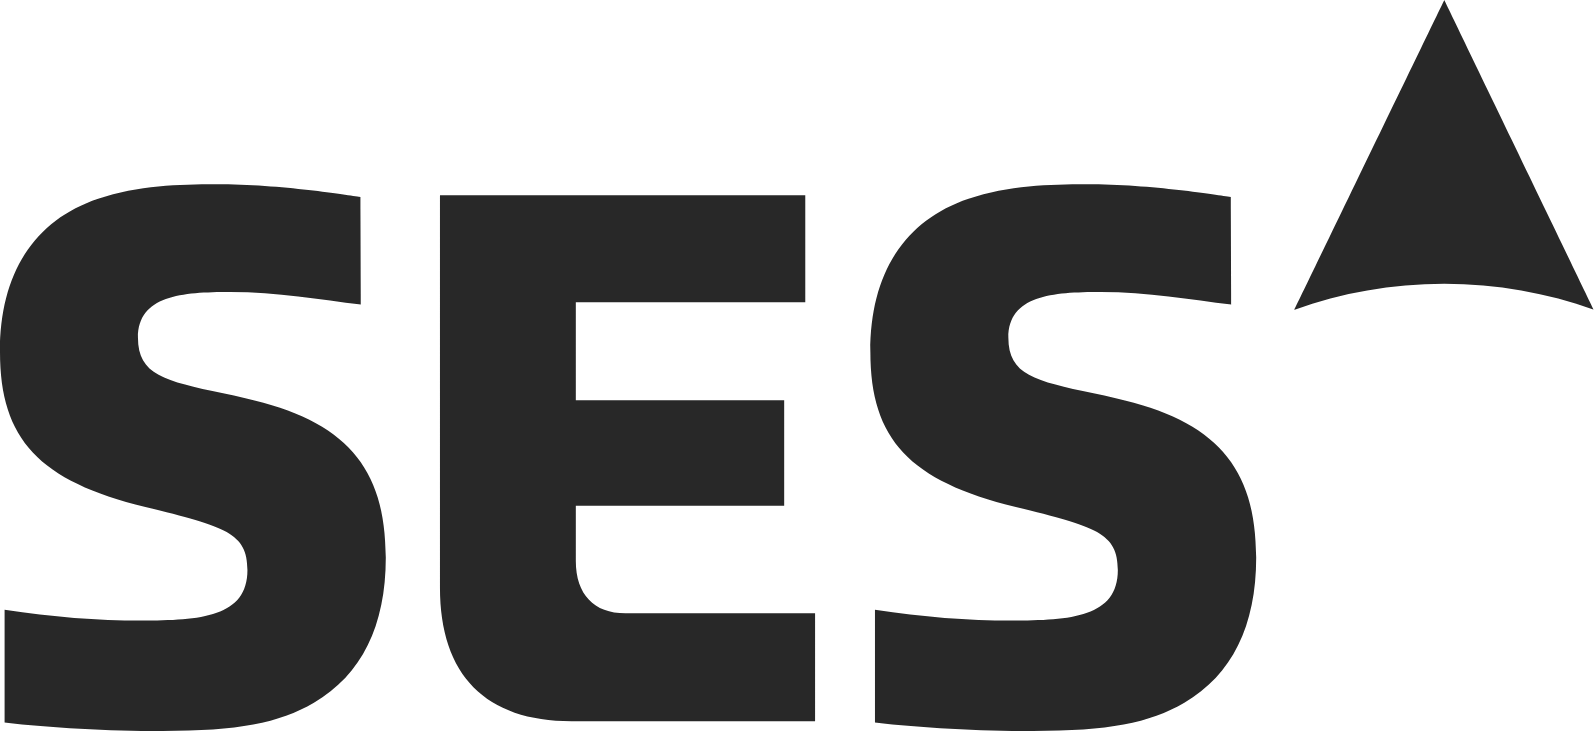 SES S.A. logo large (transparent PNG)